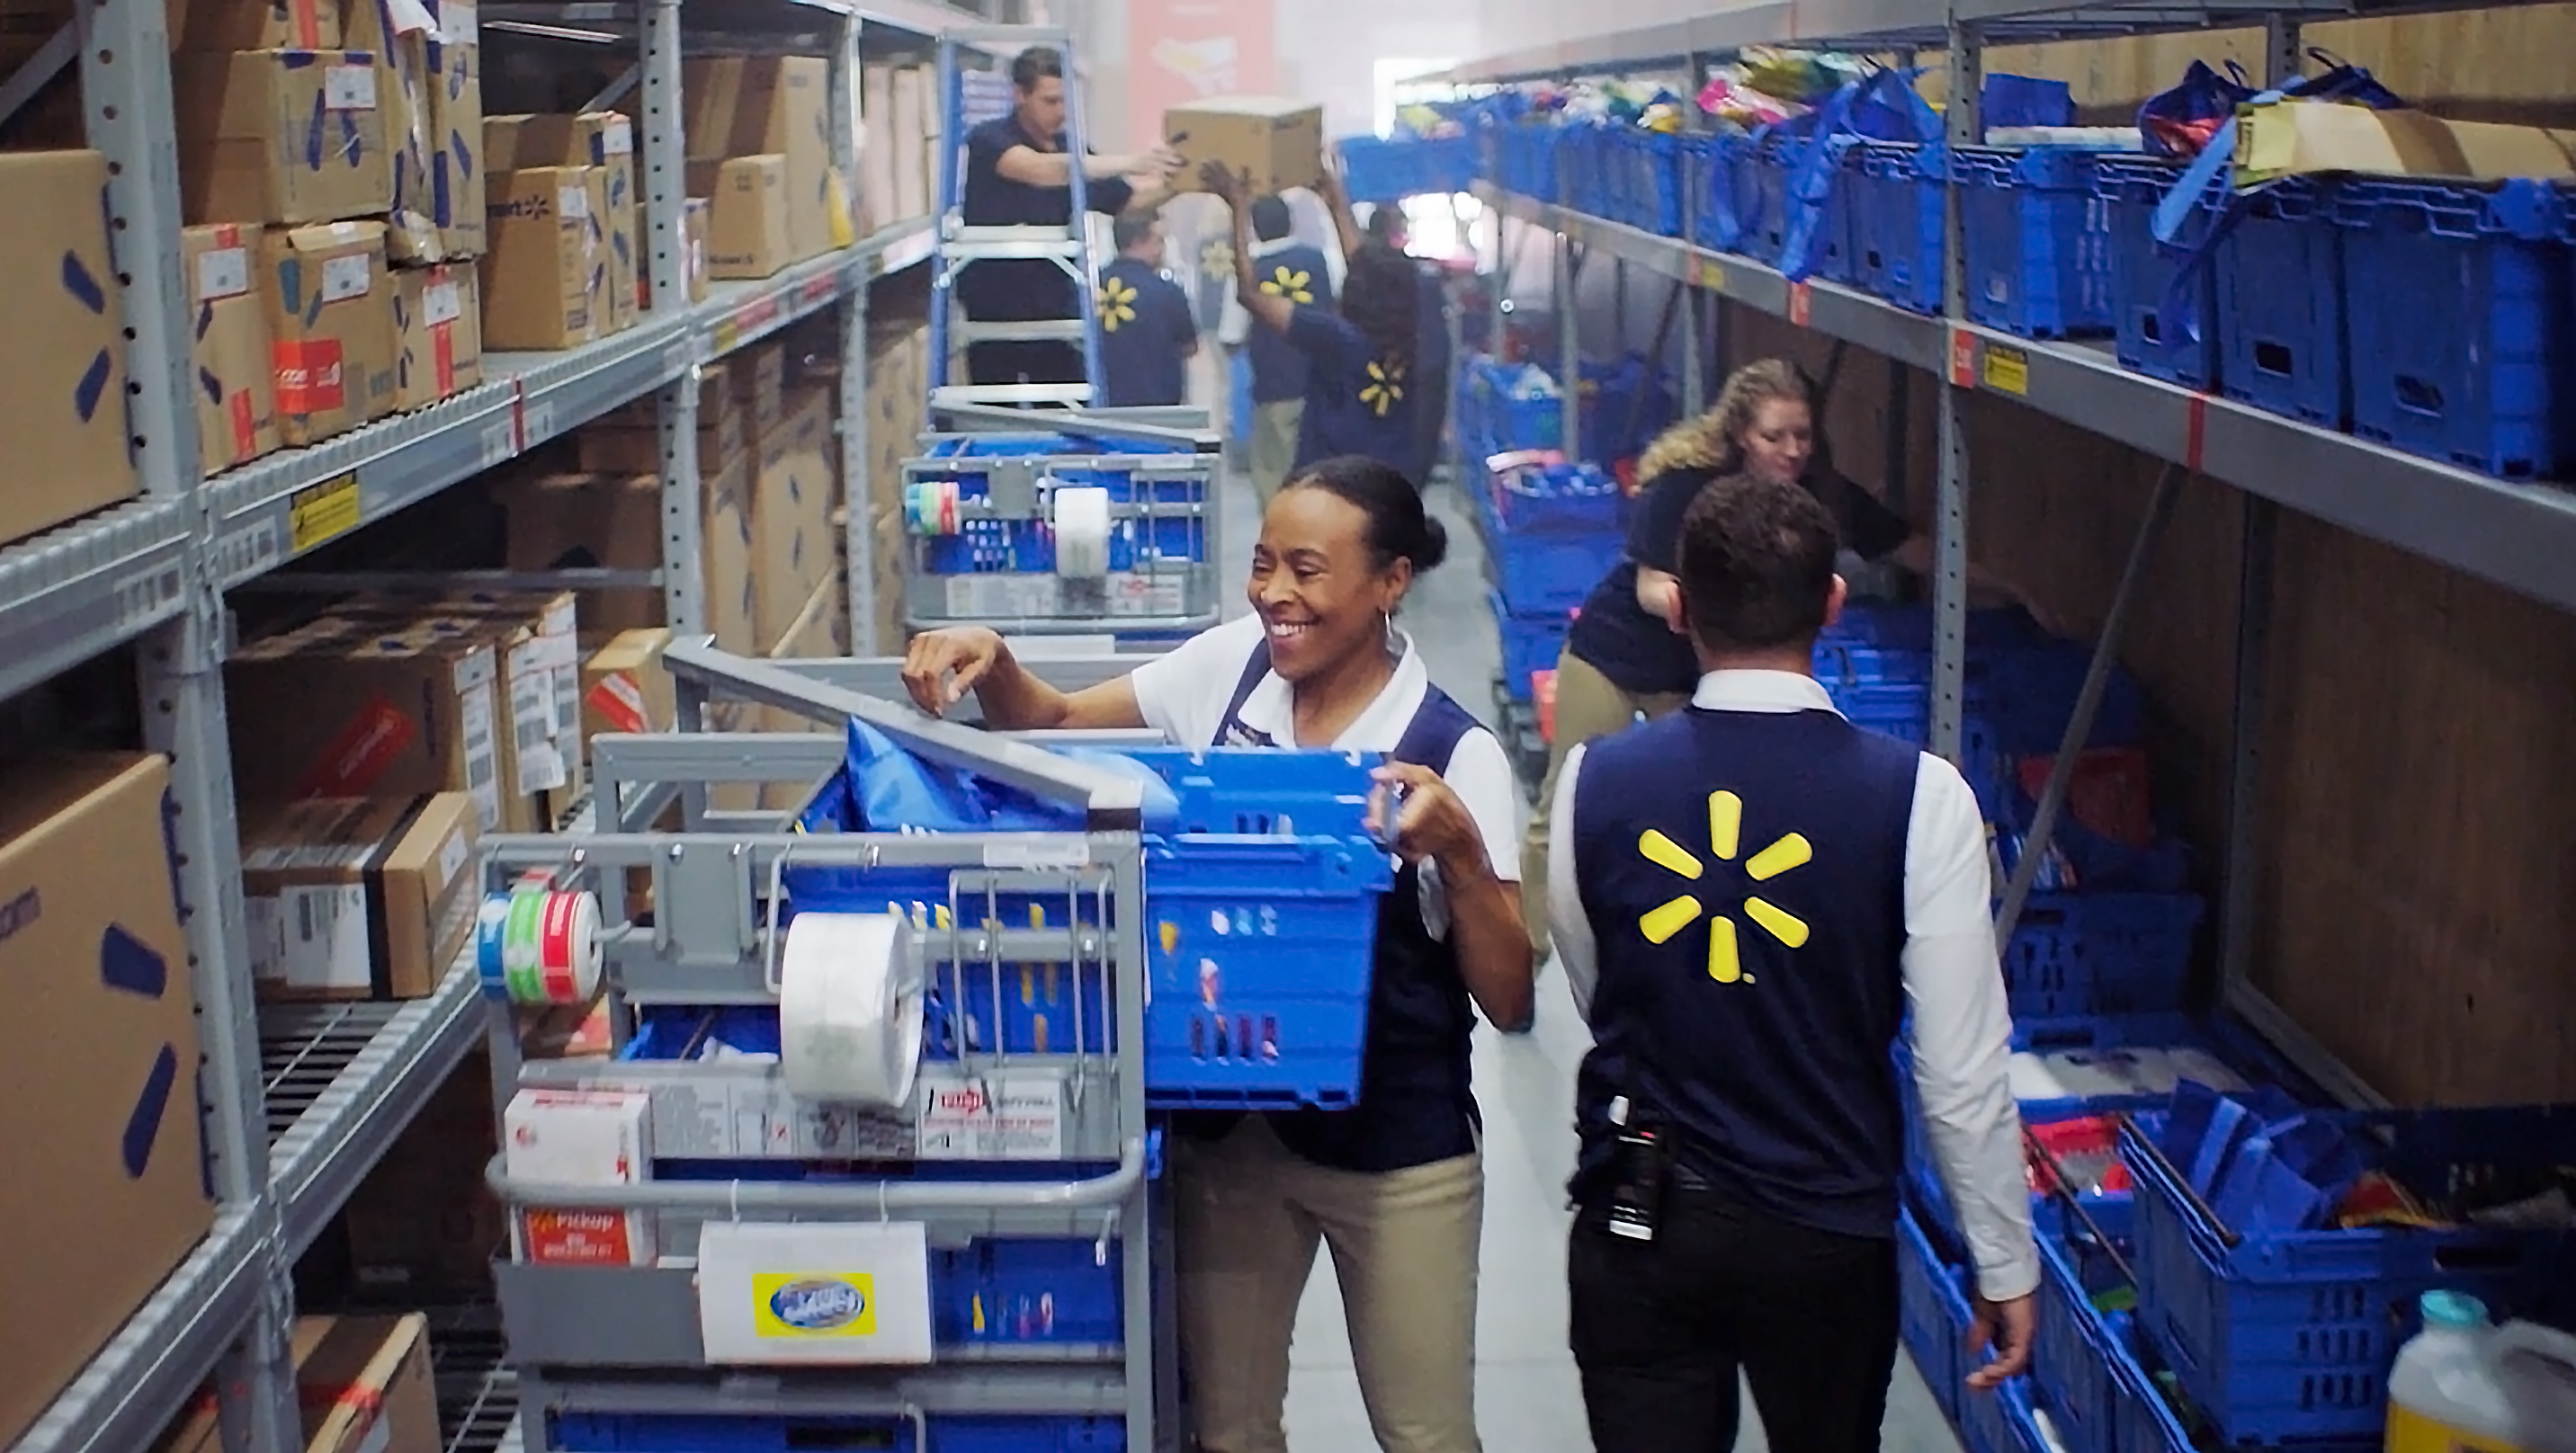 Advent International to acquire majority stake in Walmart Brazil